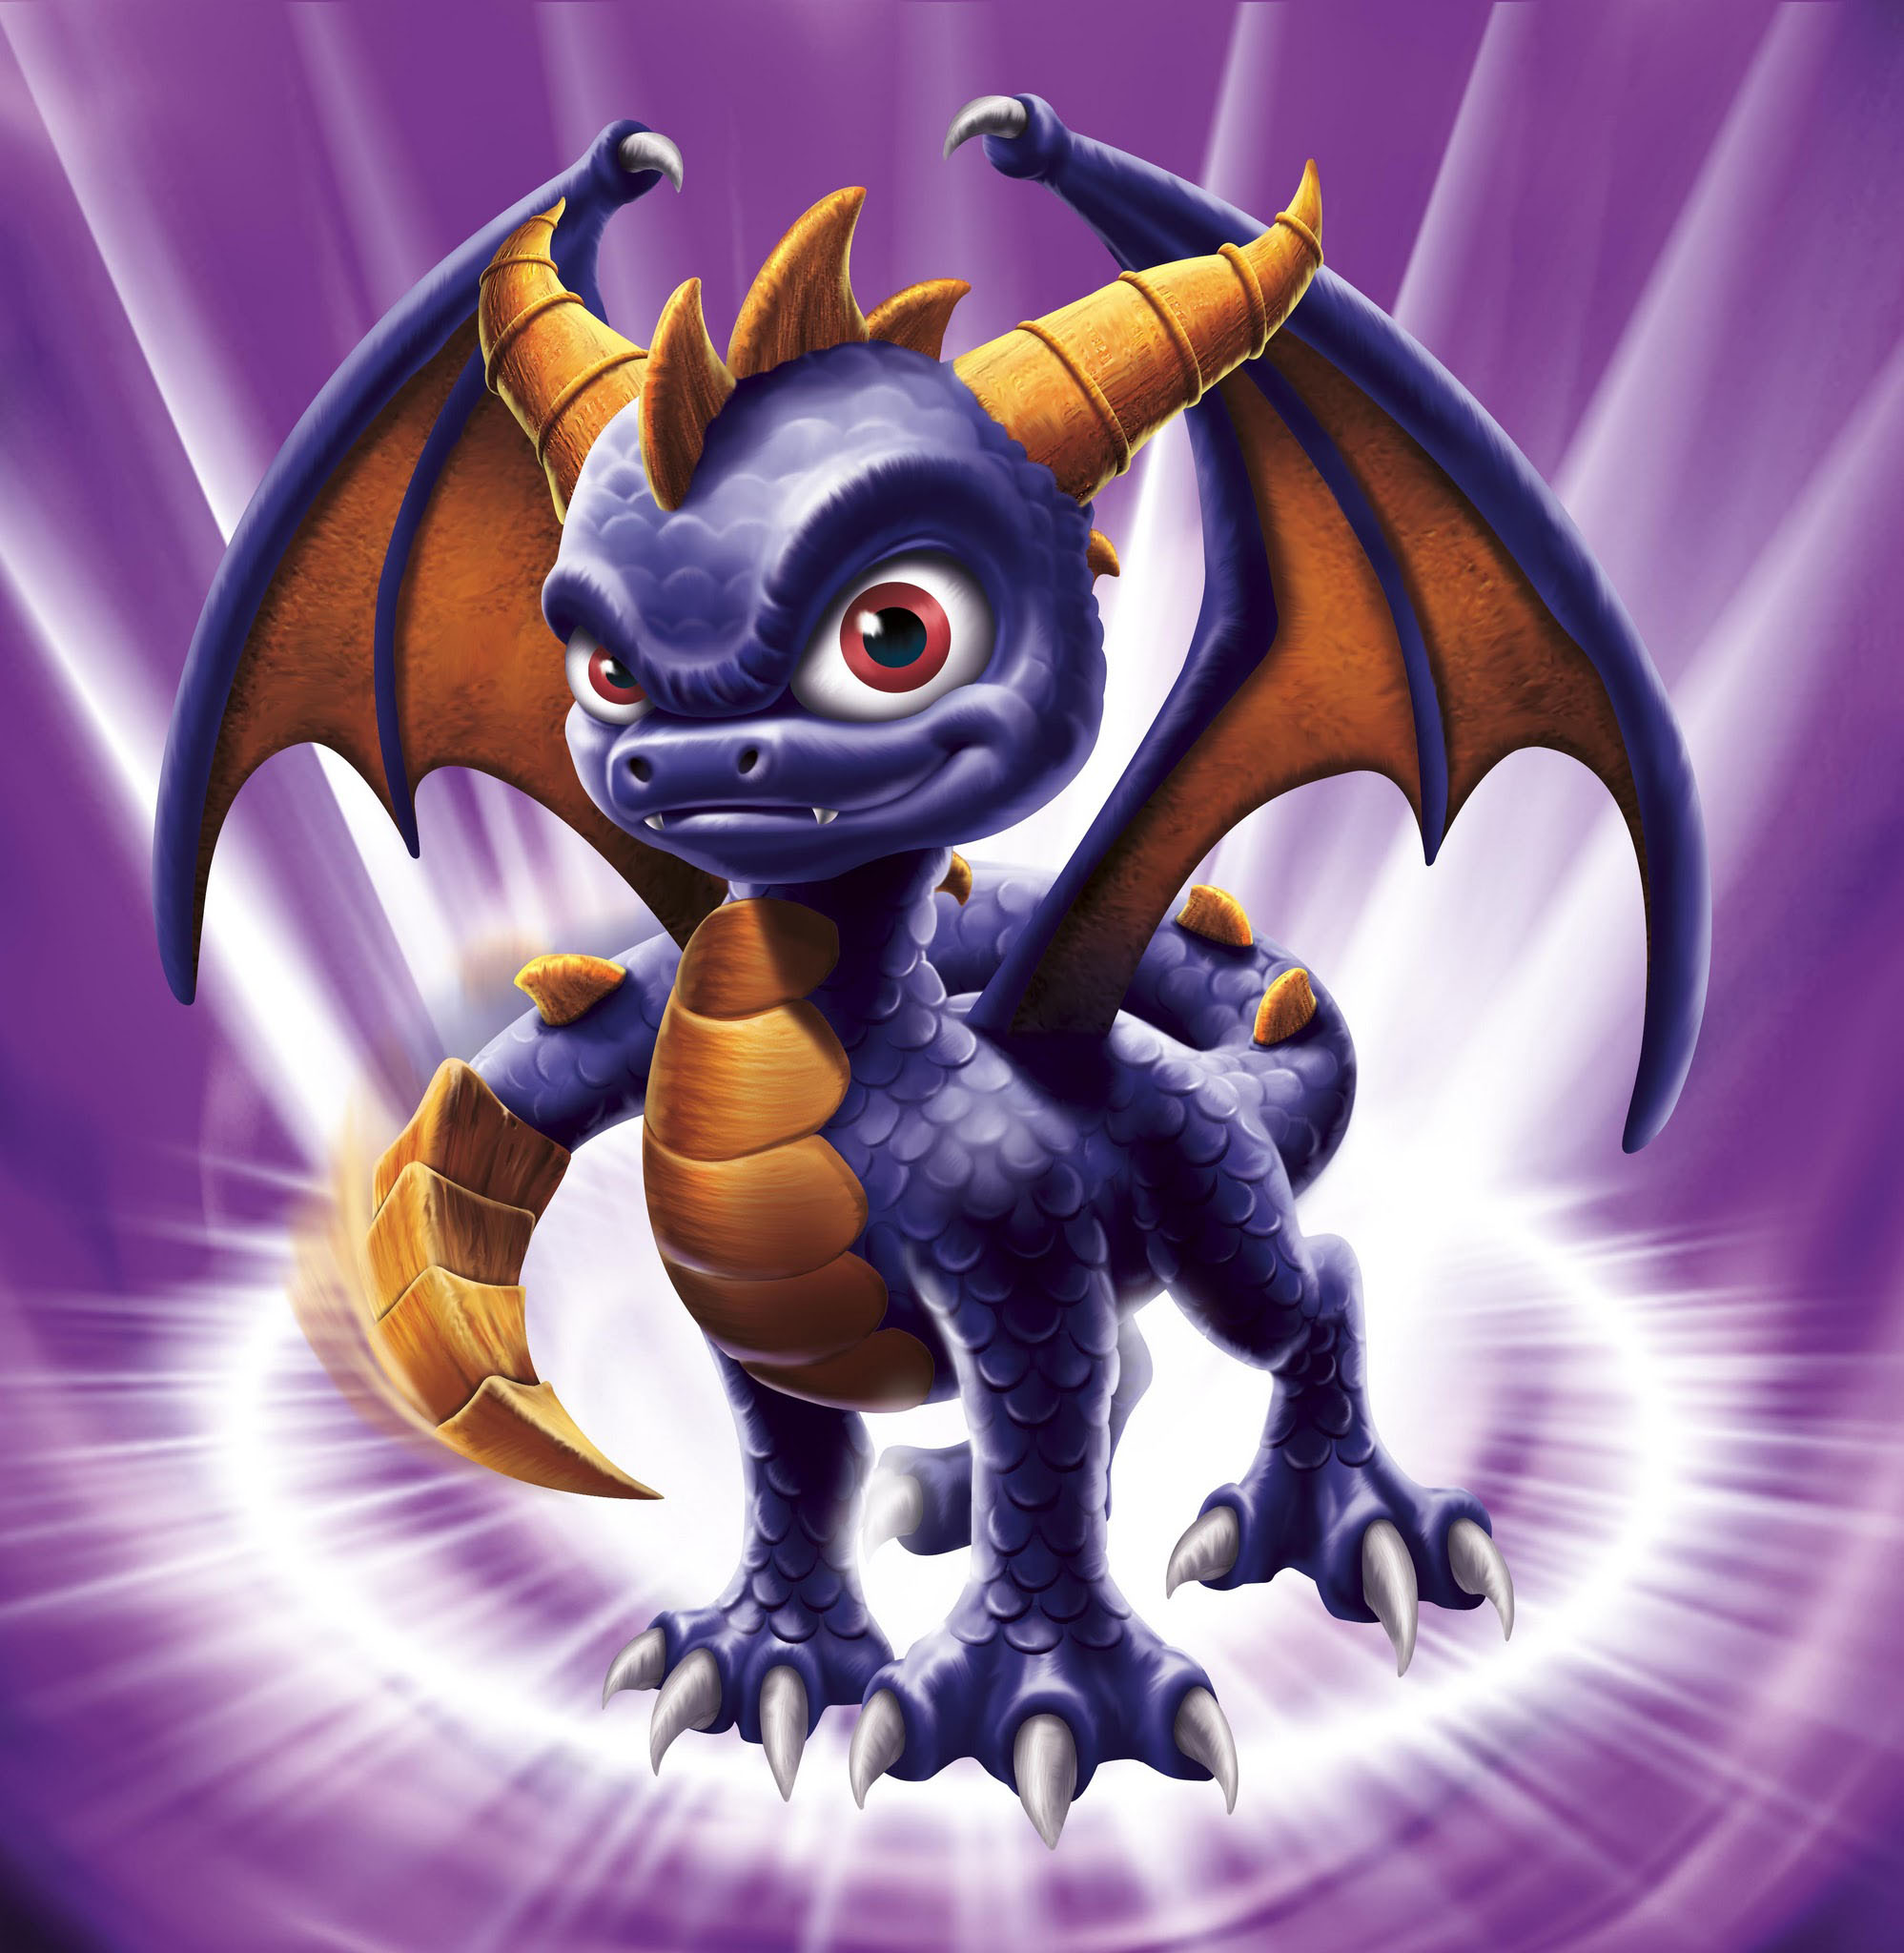 spyro the dragon game checklist